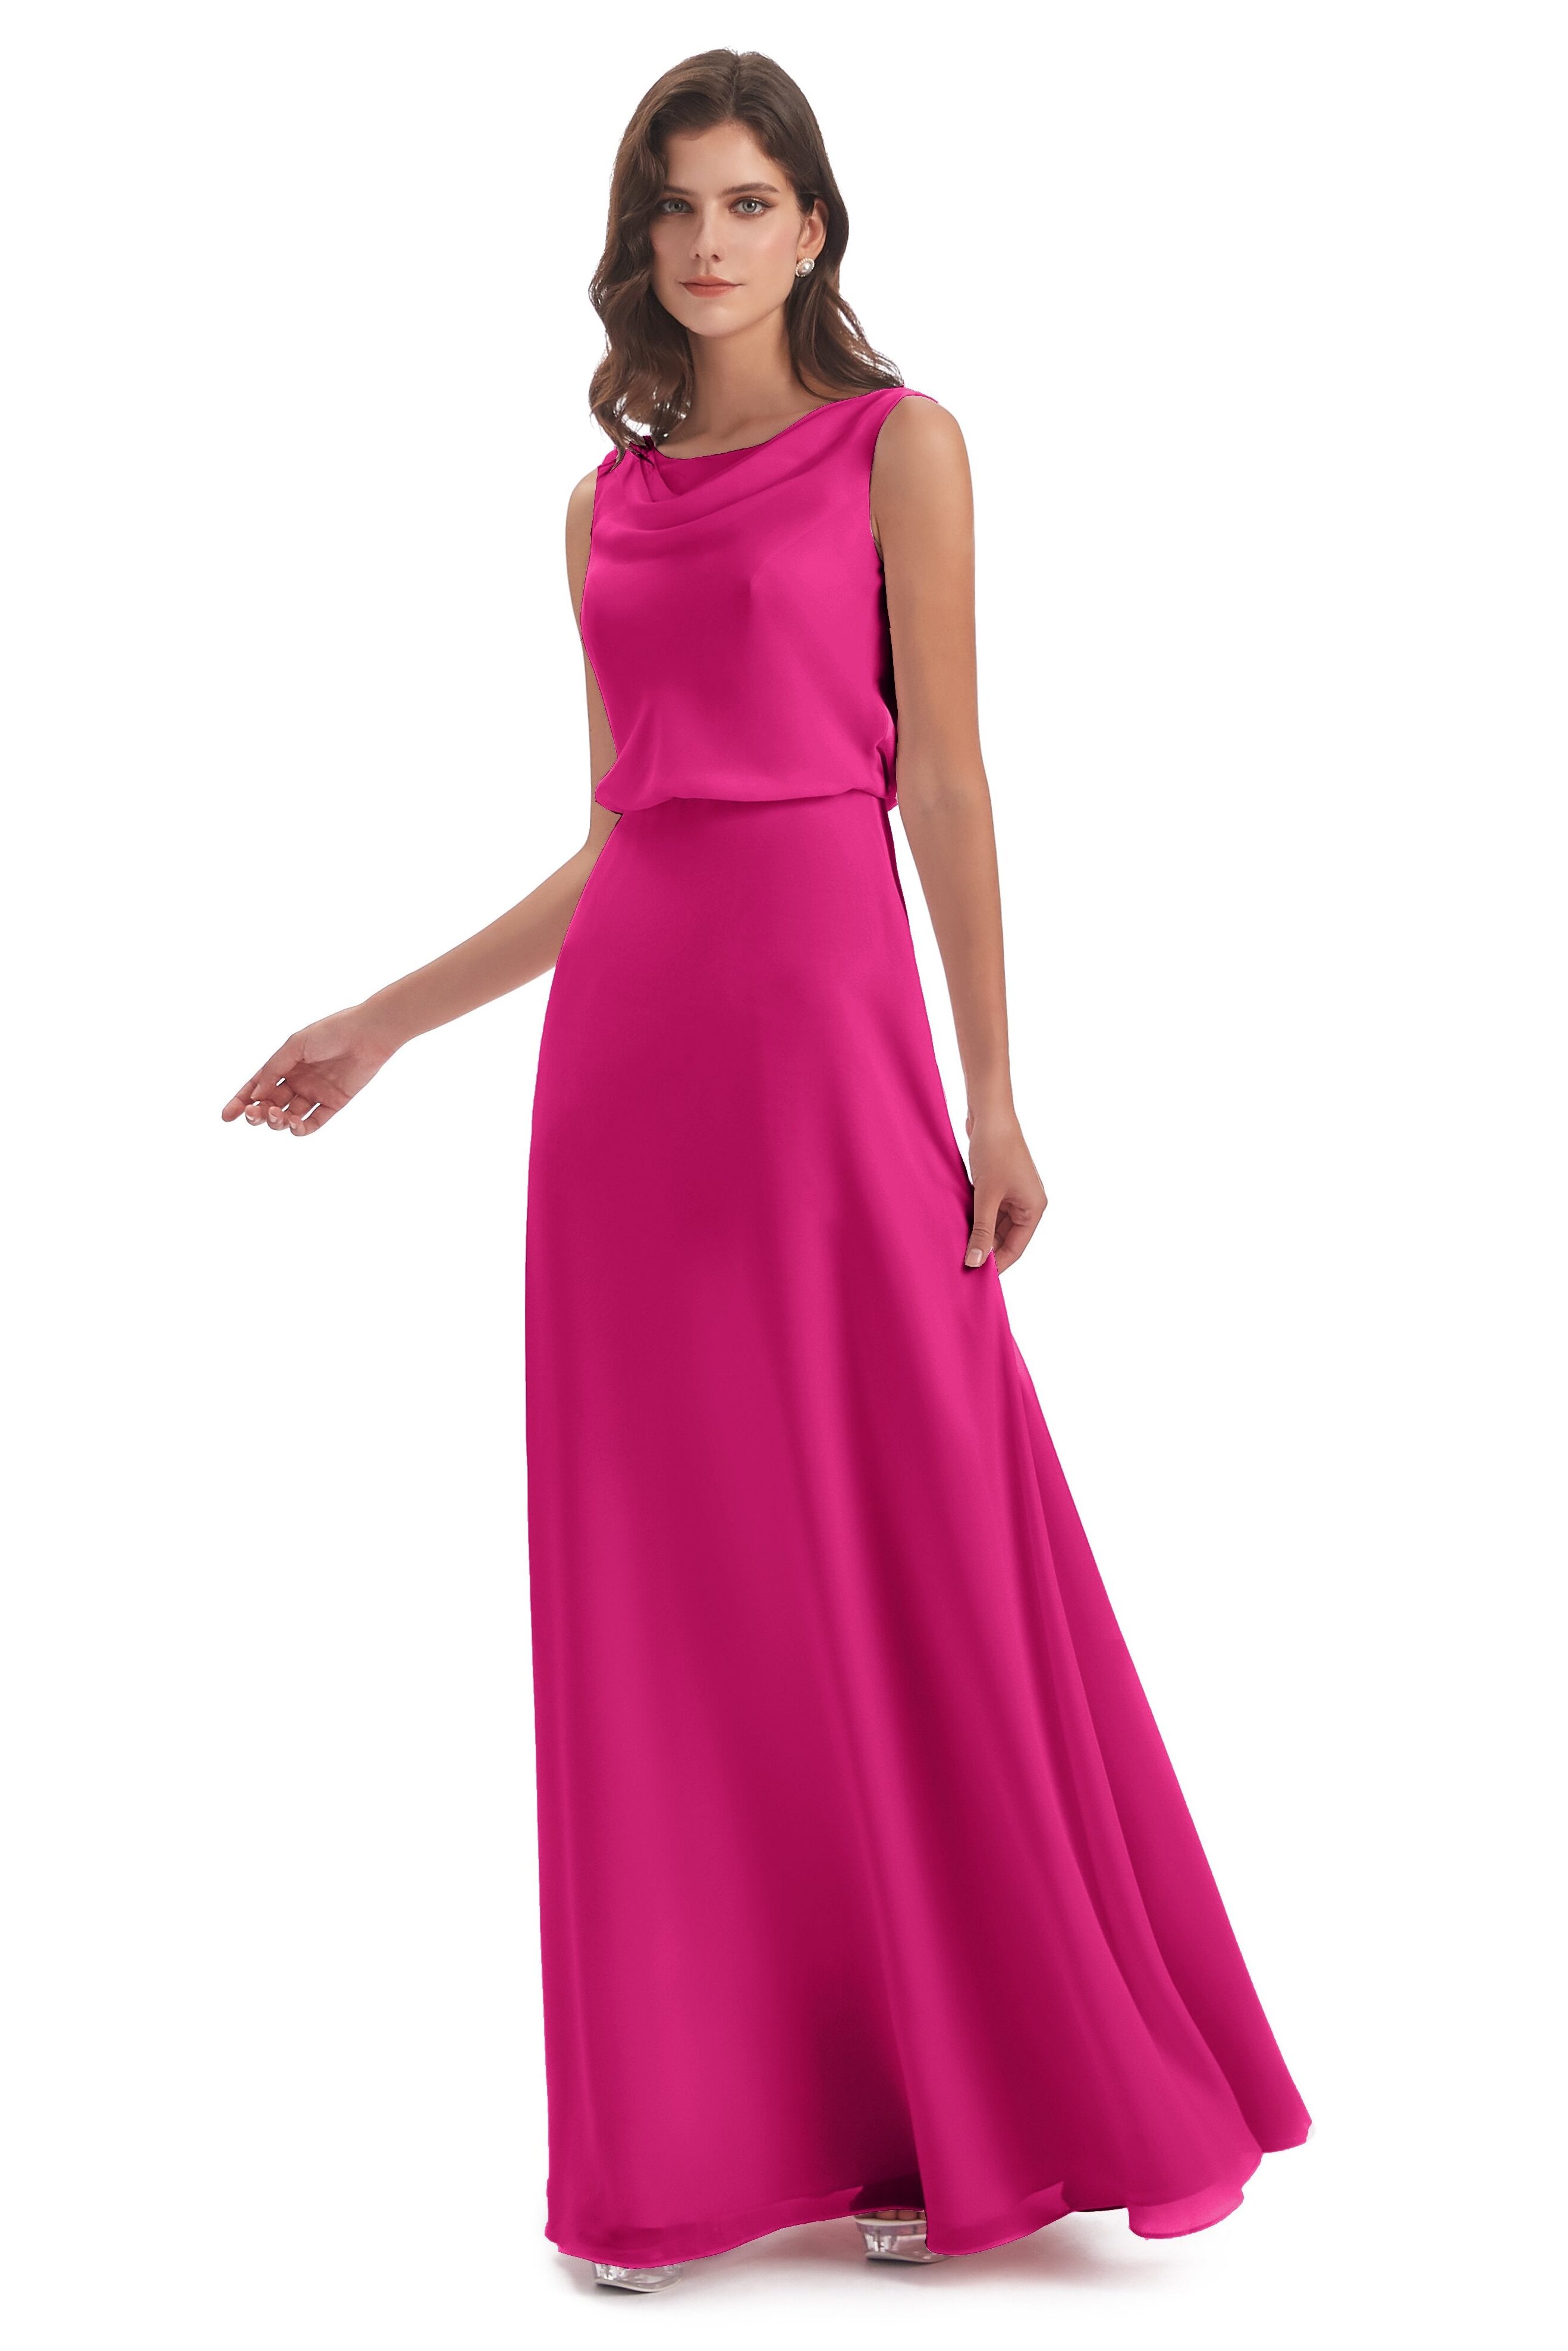 Colors for bridesmaid dresses in 2022 - Fuchsia 